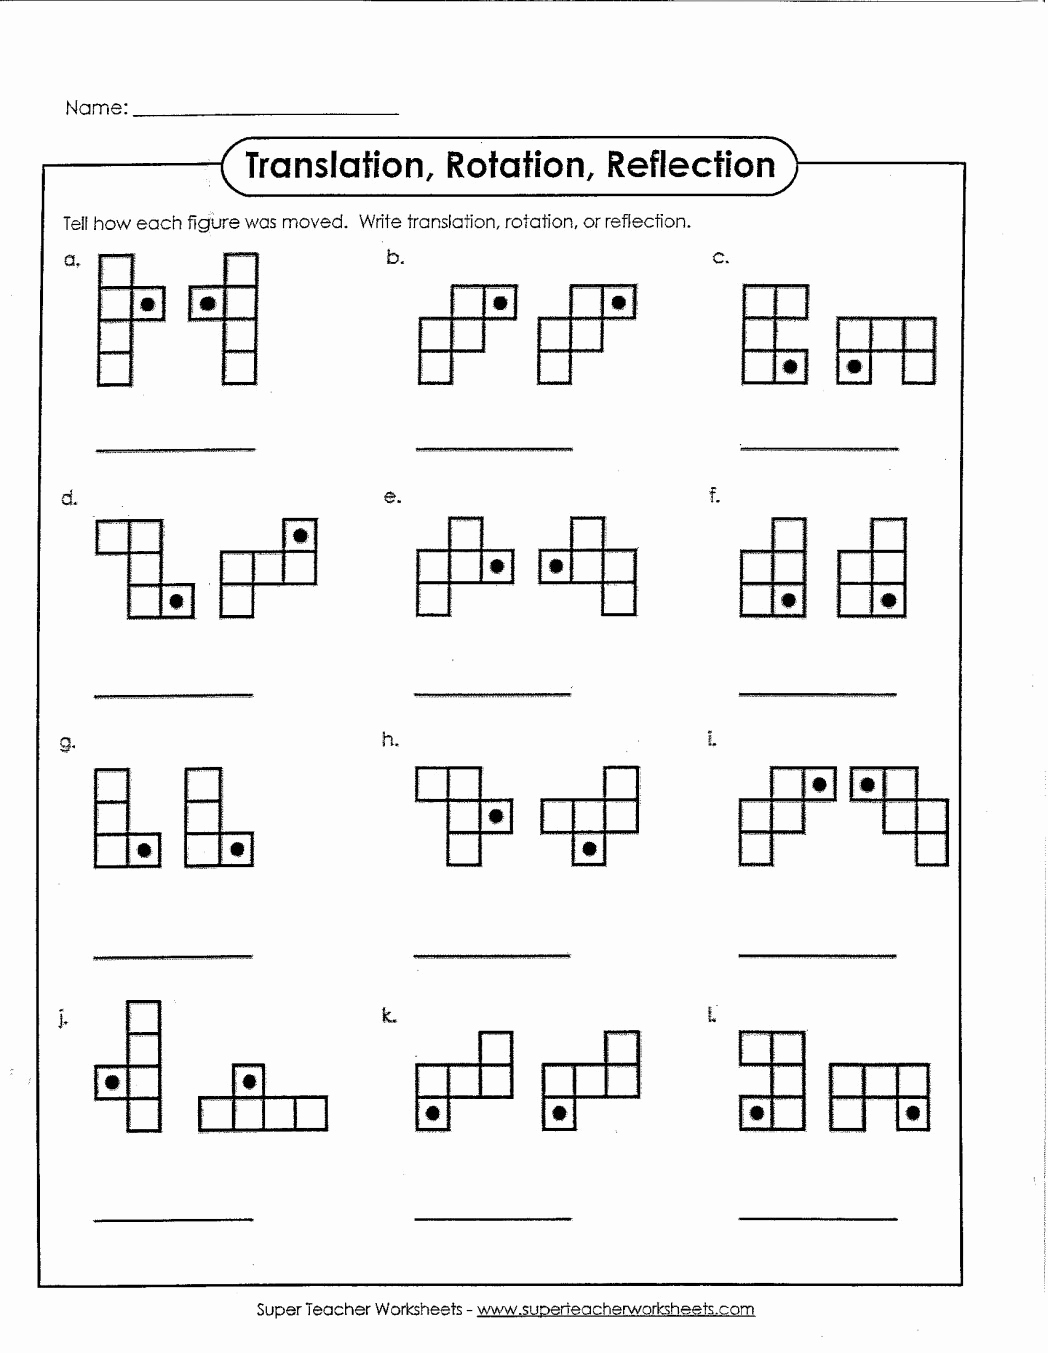 Reflection and Translation Worksheets Awesome Rotation Reflection Translation Worksheets